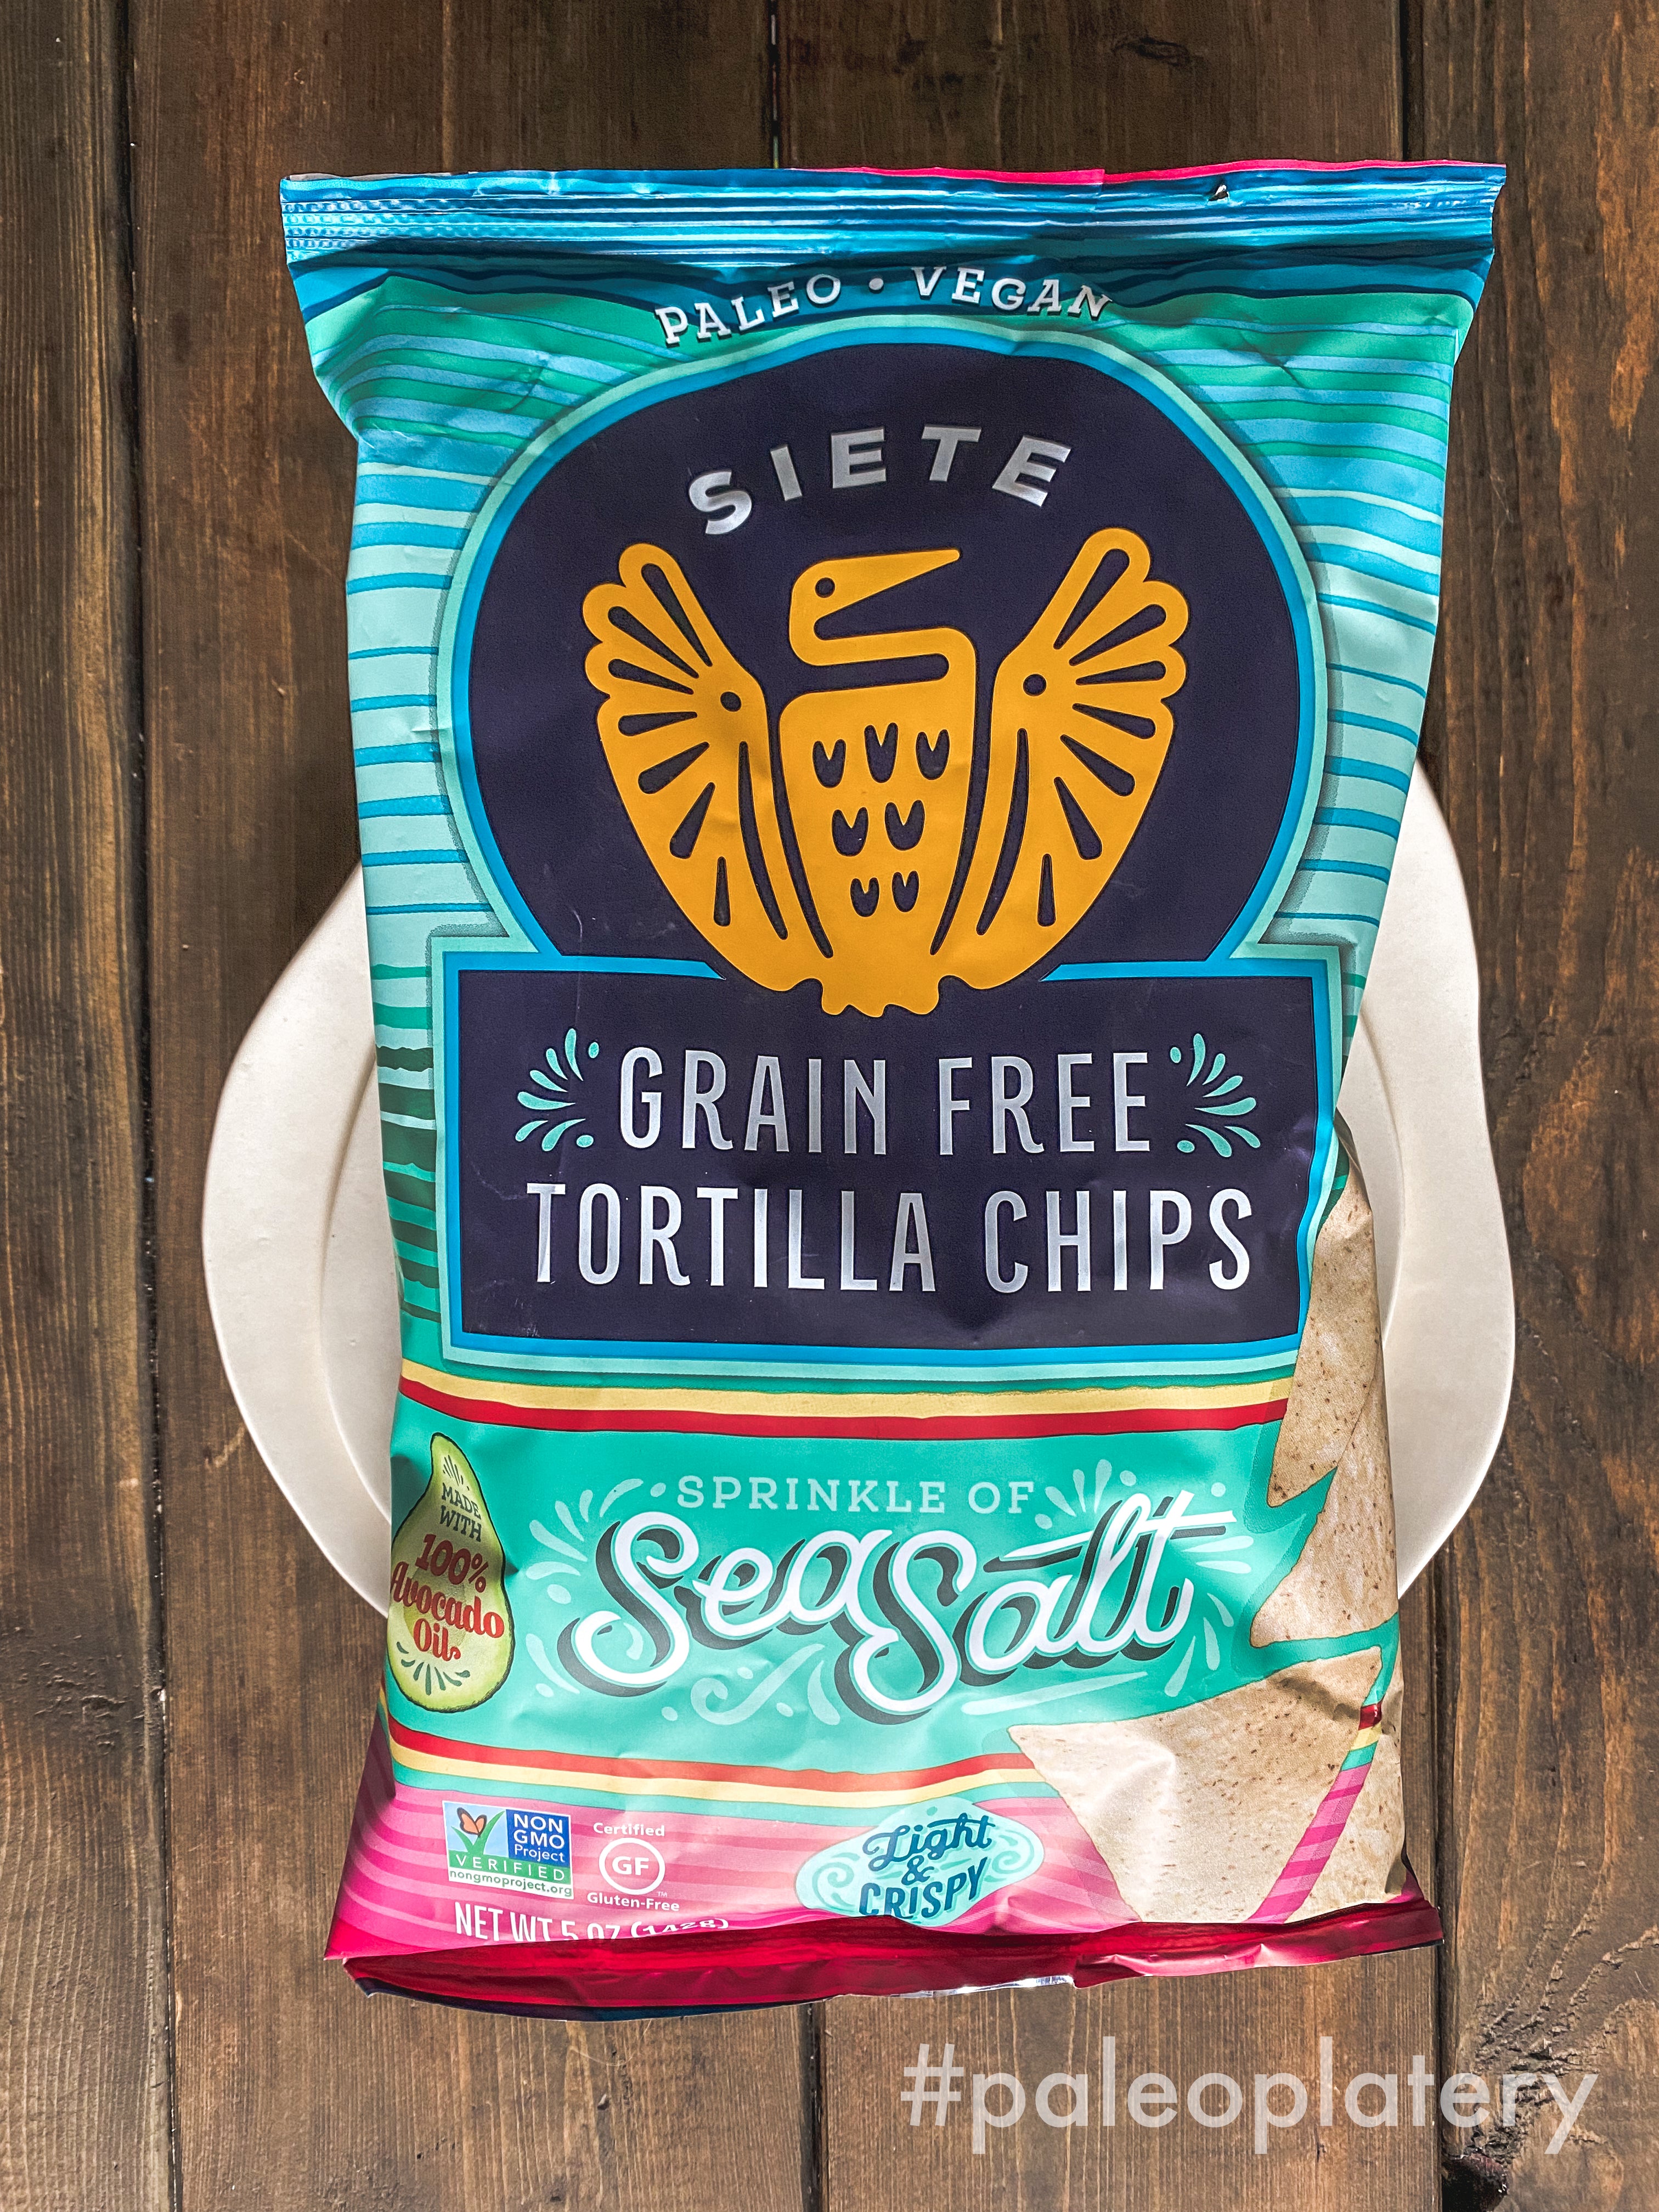 Sea Salt Grain Free Tortilla Chips 5 oz - 6 Bags